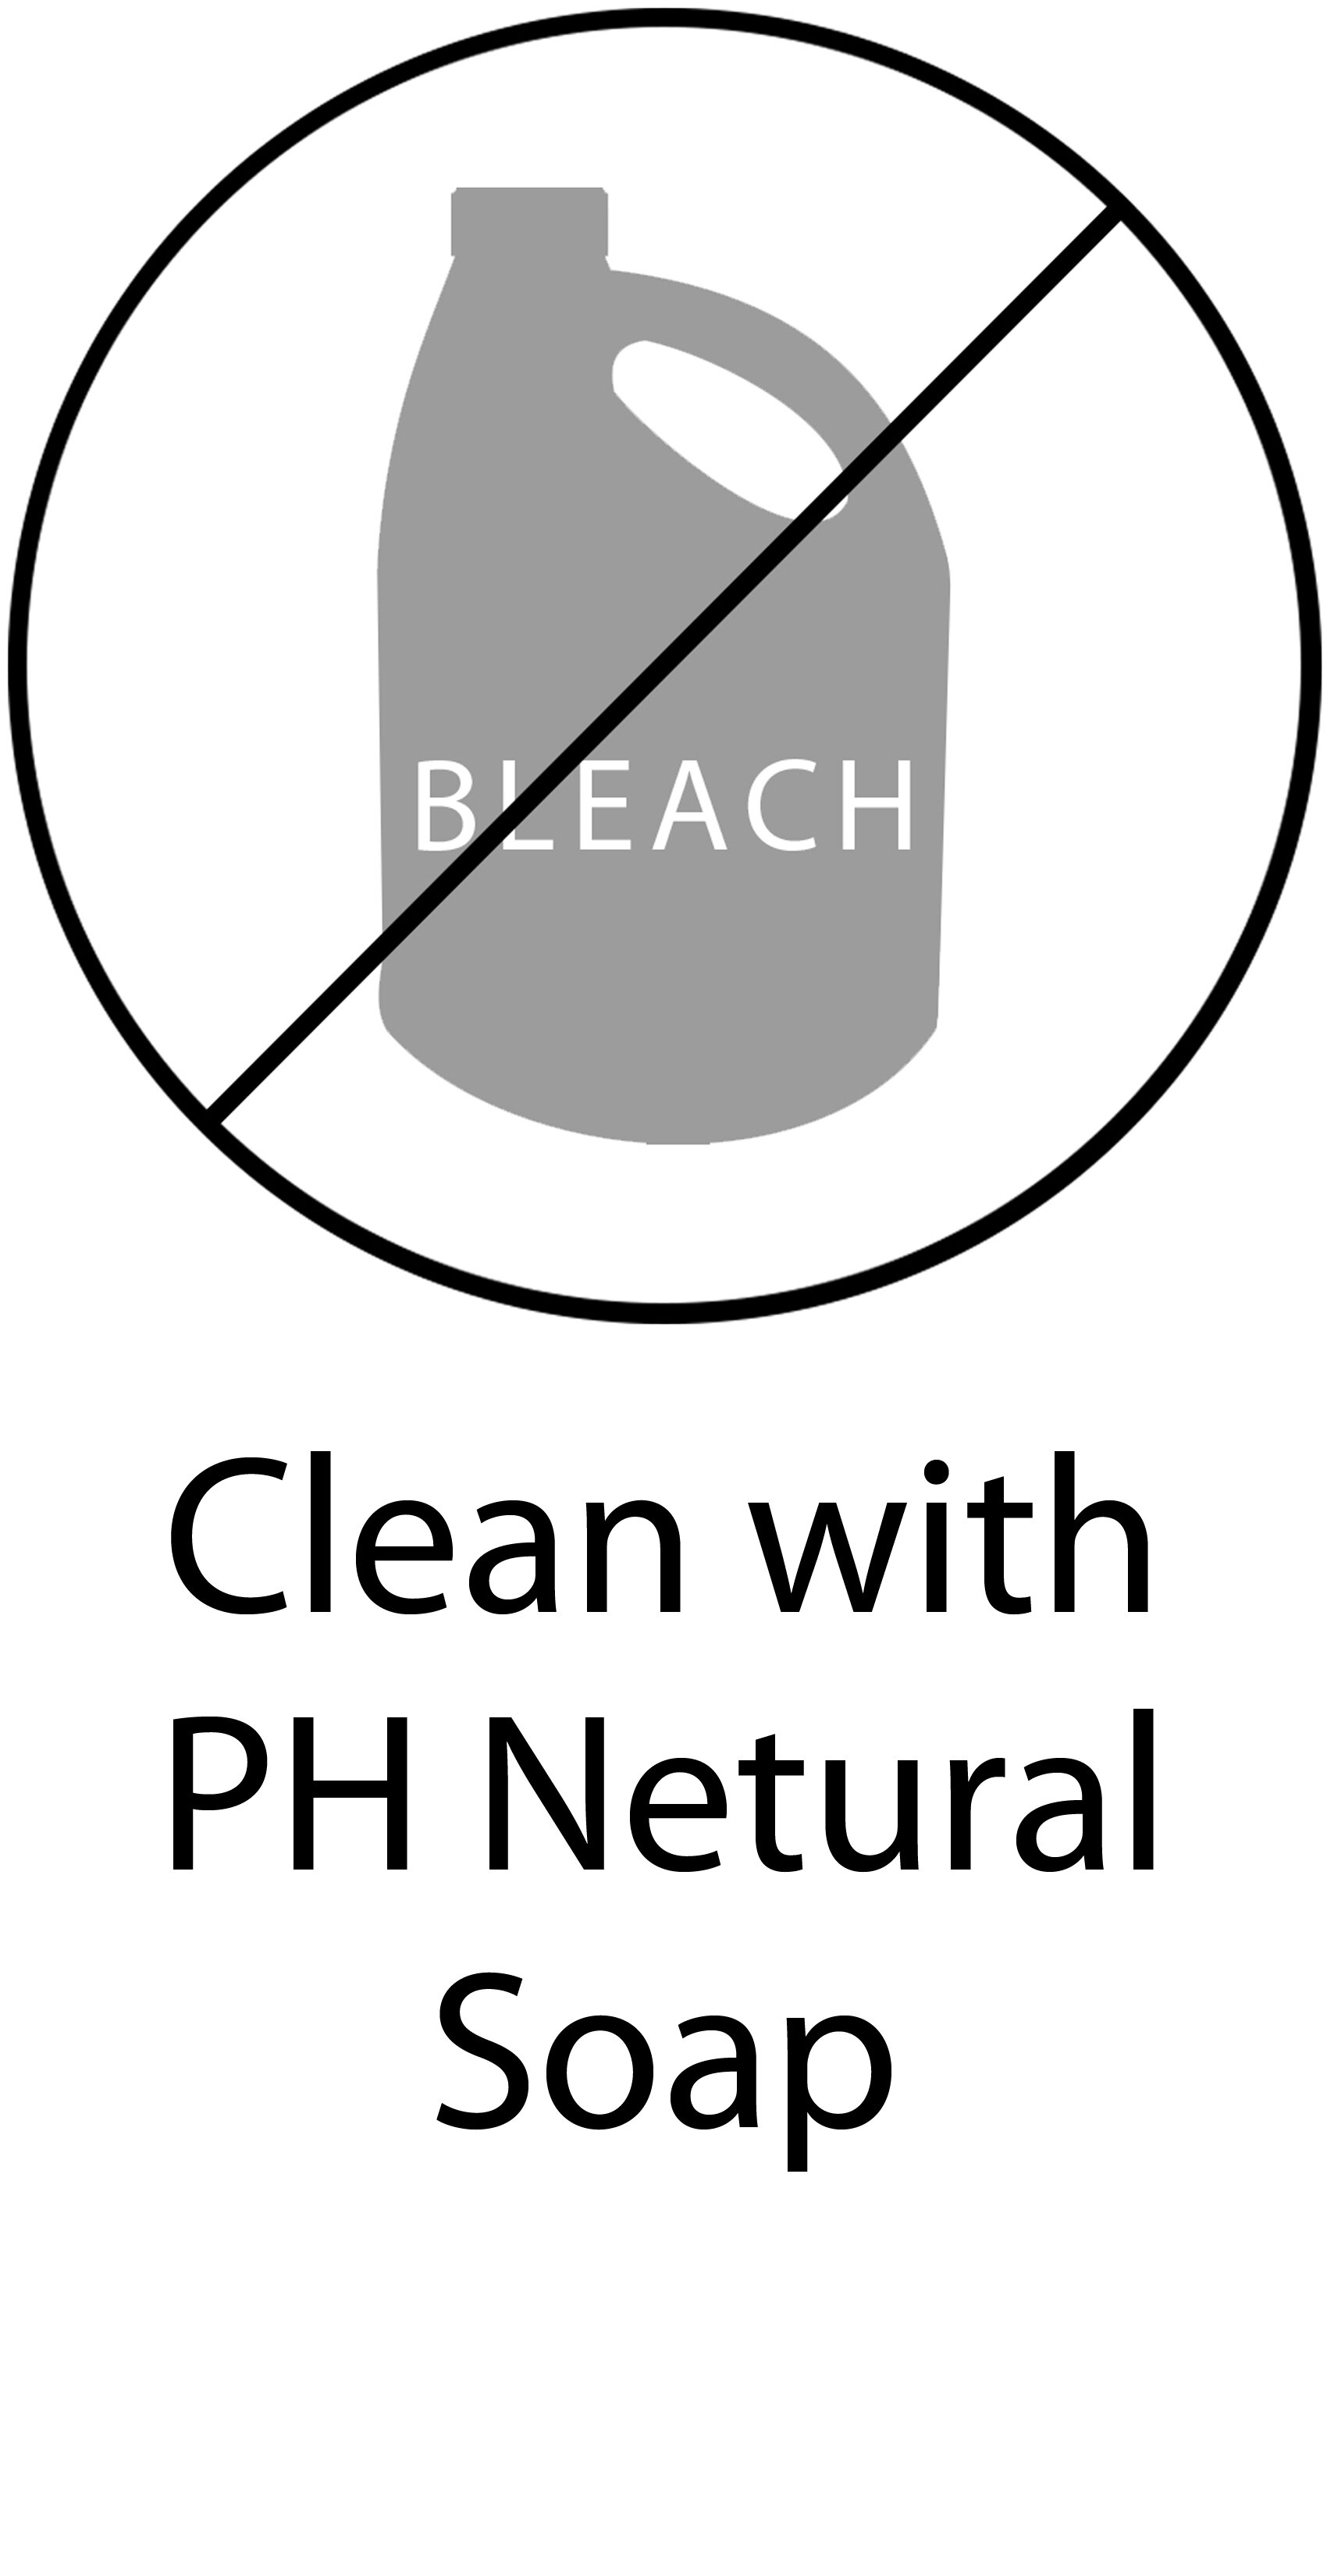 06 Clean with PH Neutral Soap.jpg